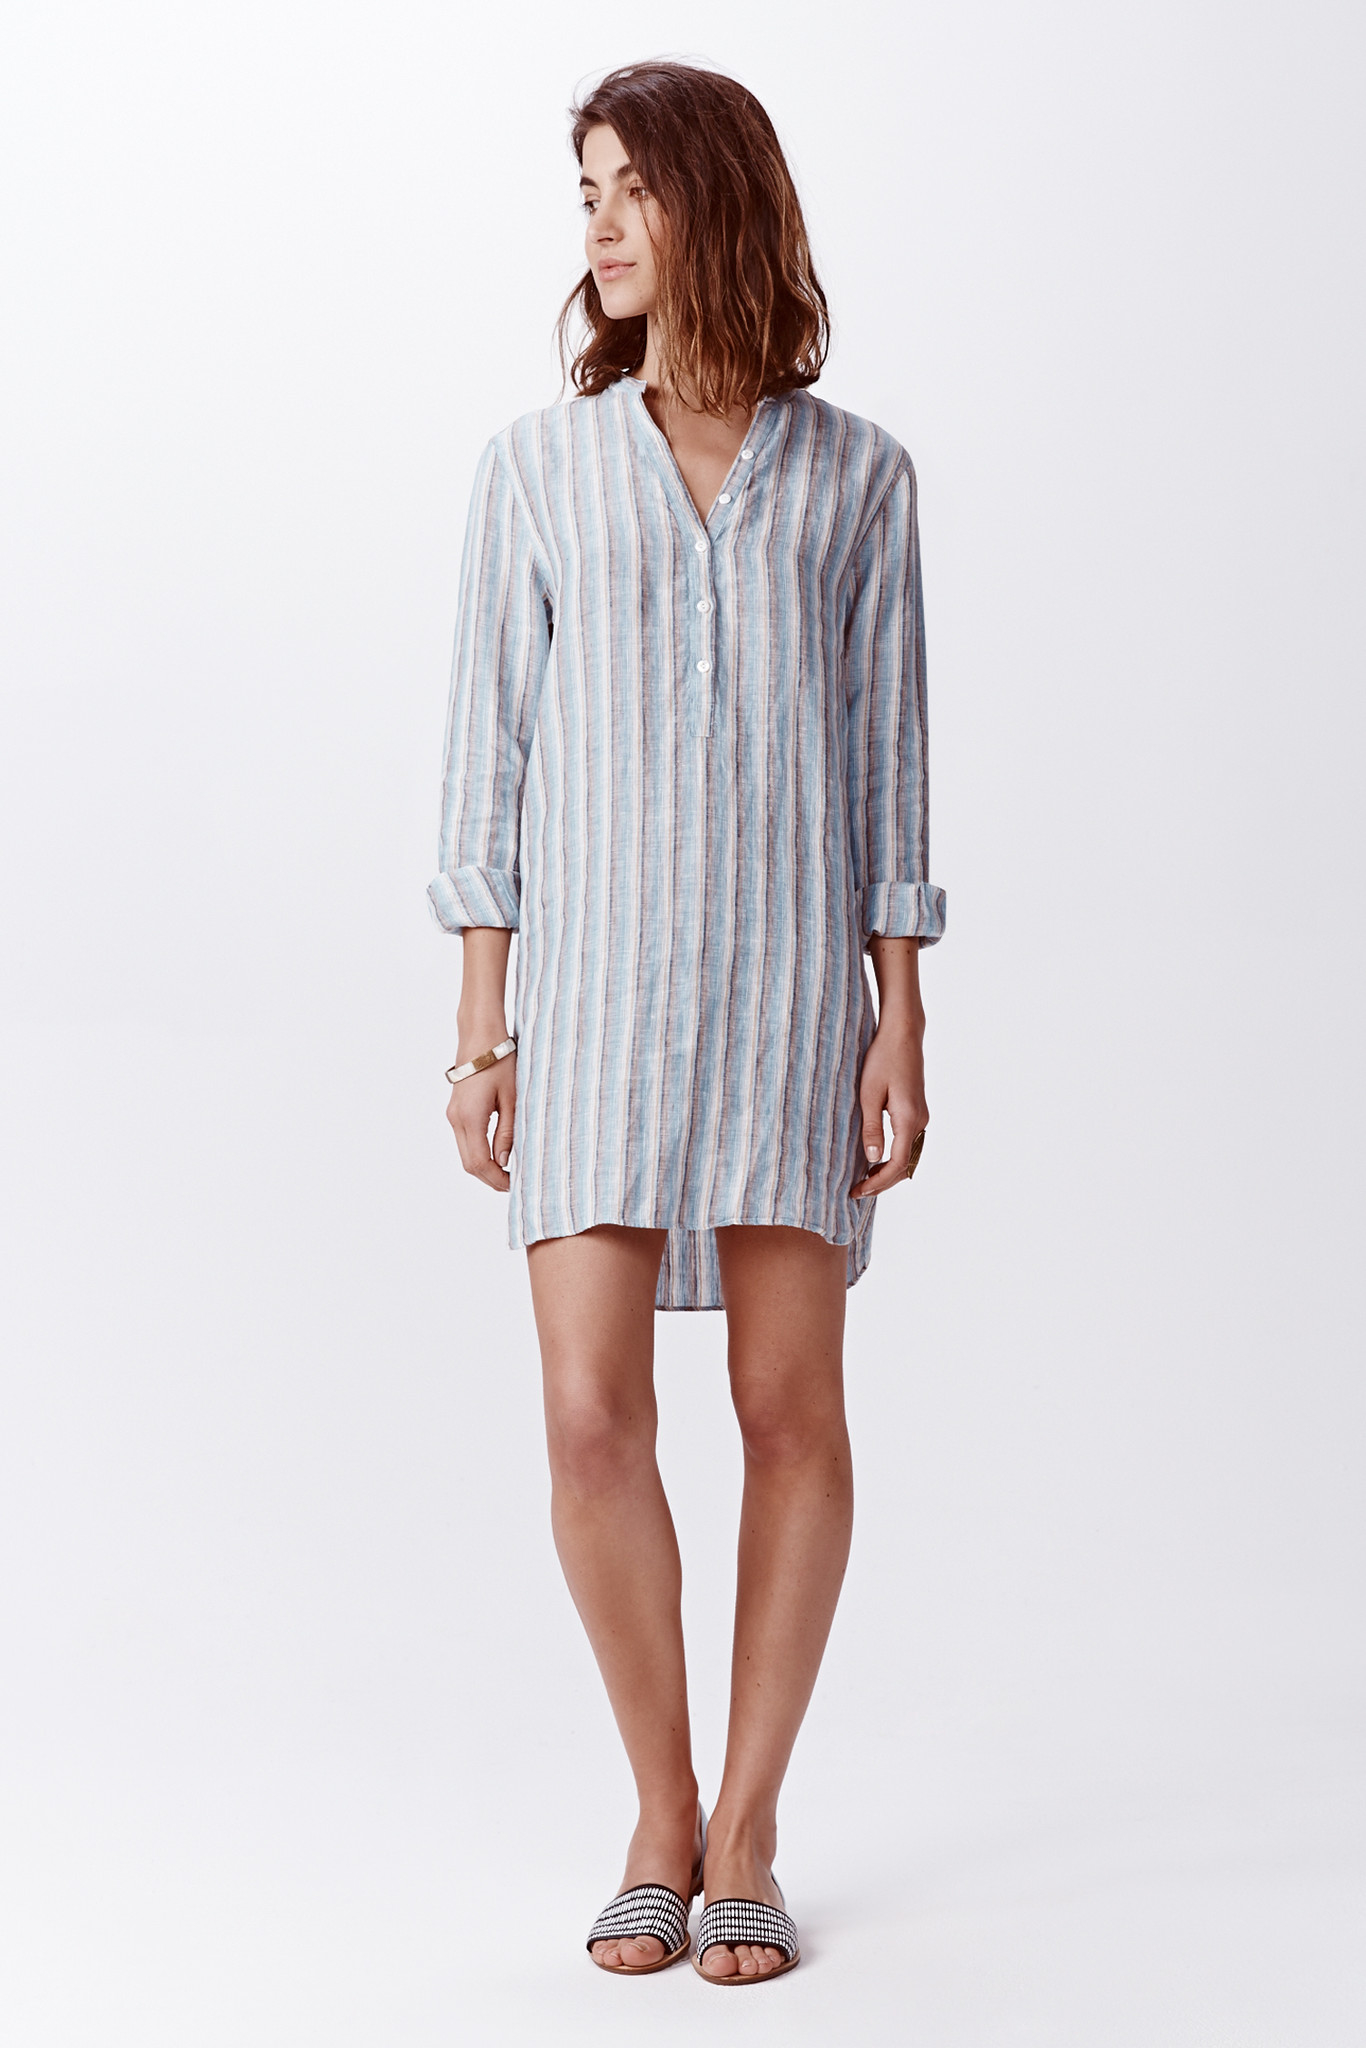 Lyst - Faherty Brand Stripe Linen Shirt Dress in Blue